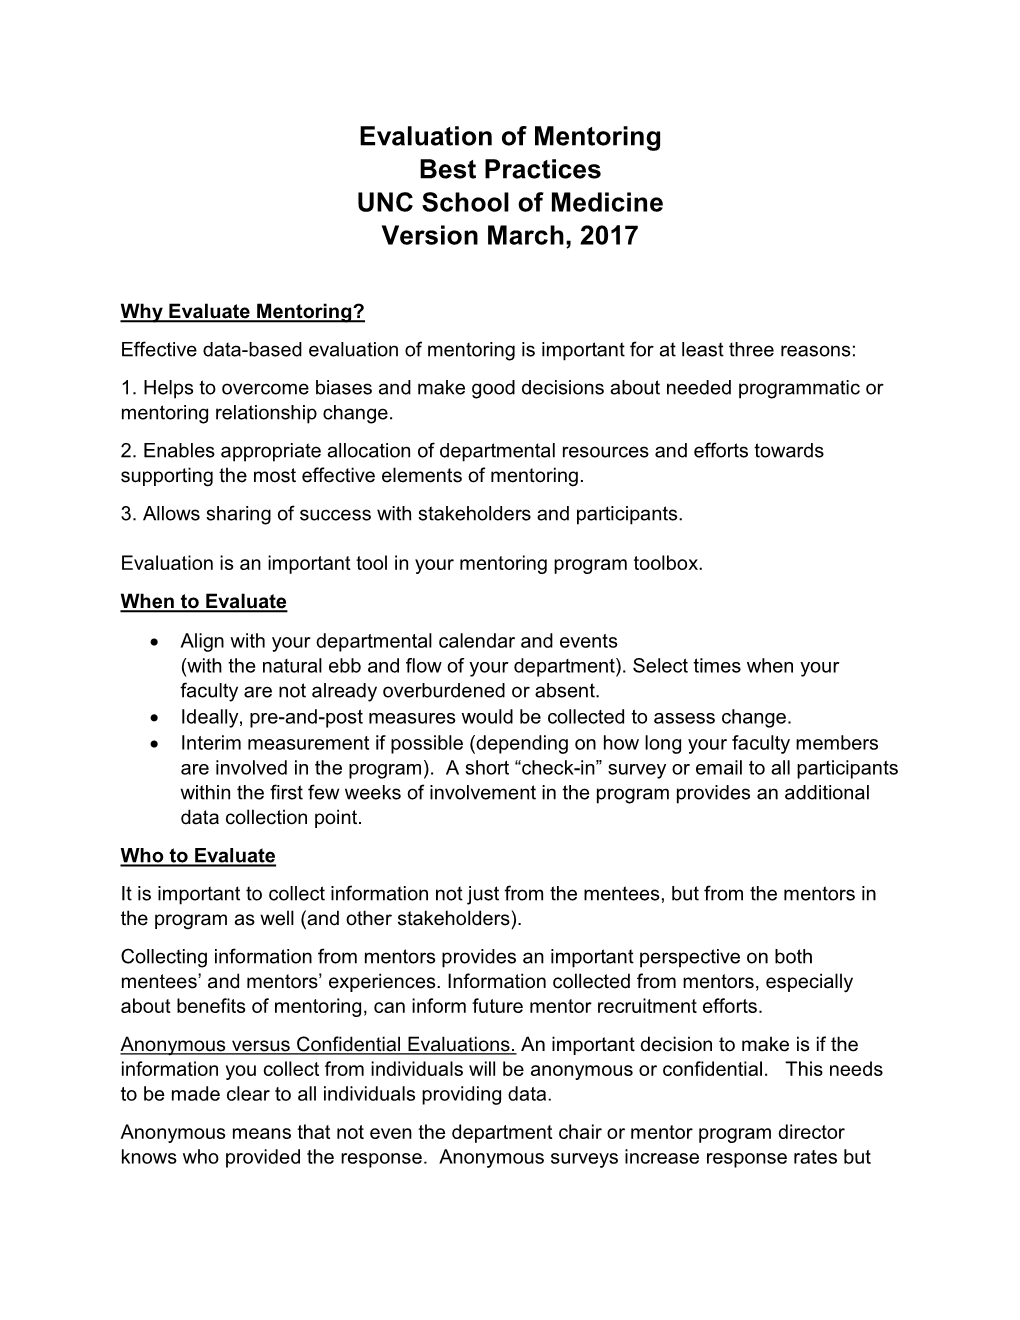 Evaluation of Mentoring Best Practices UNC School of Medicine Version March, 2017